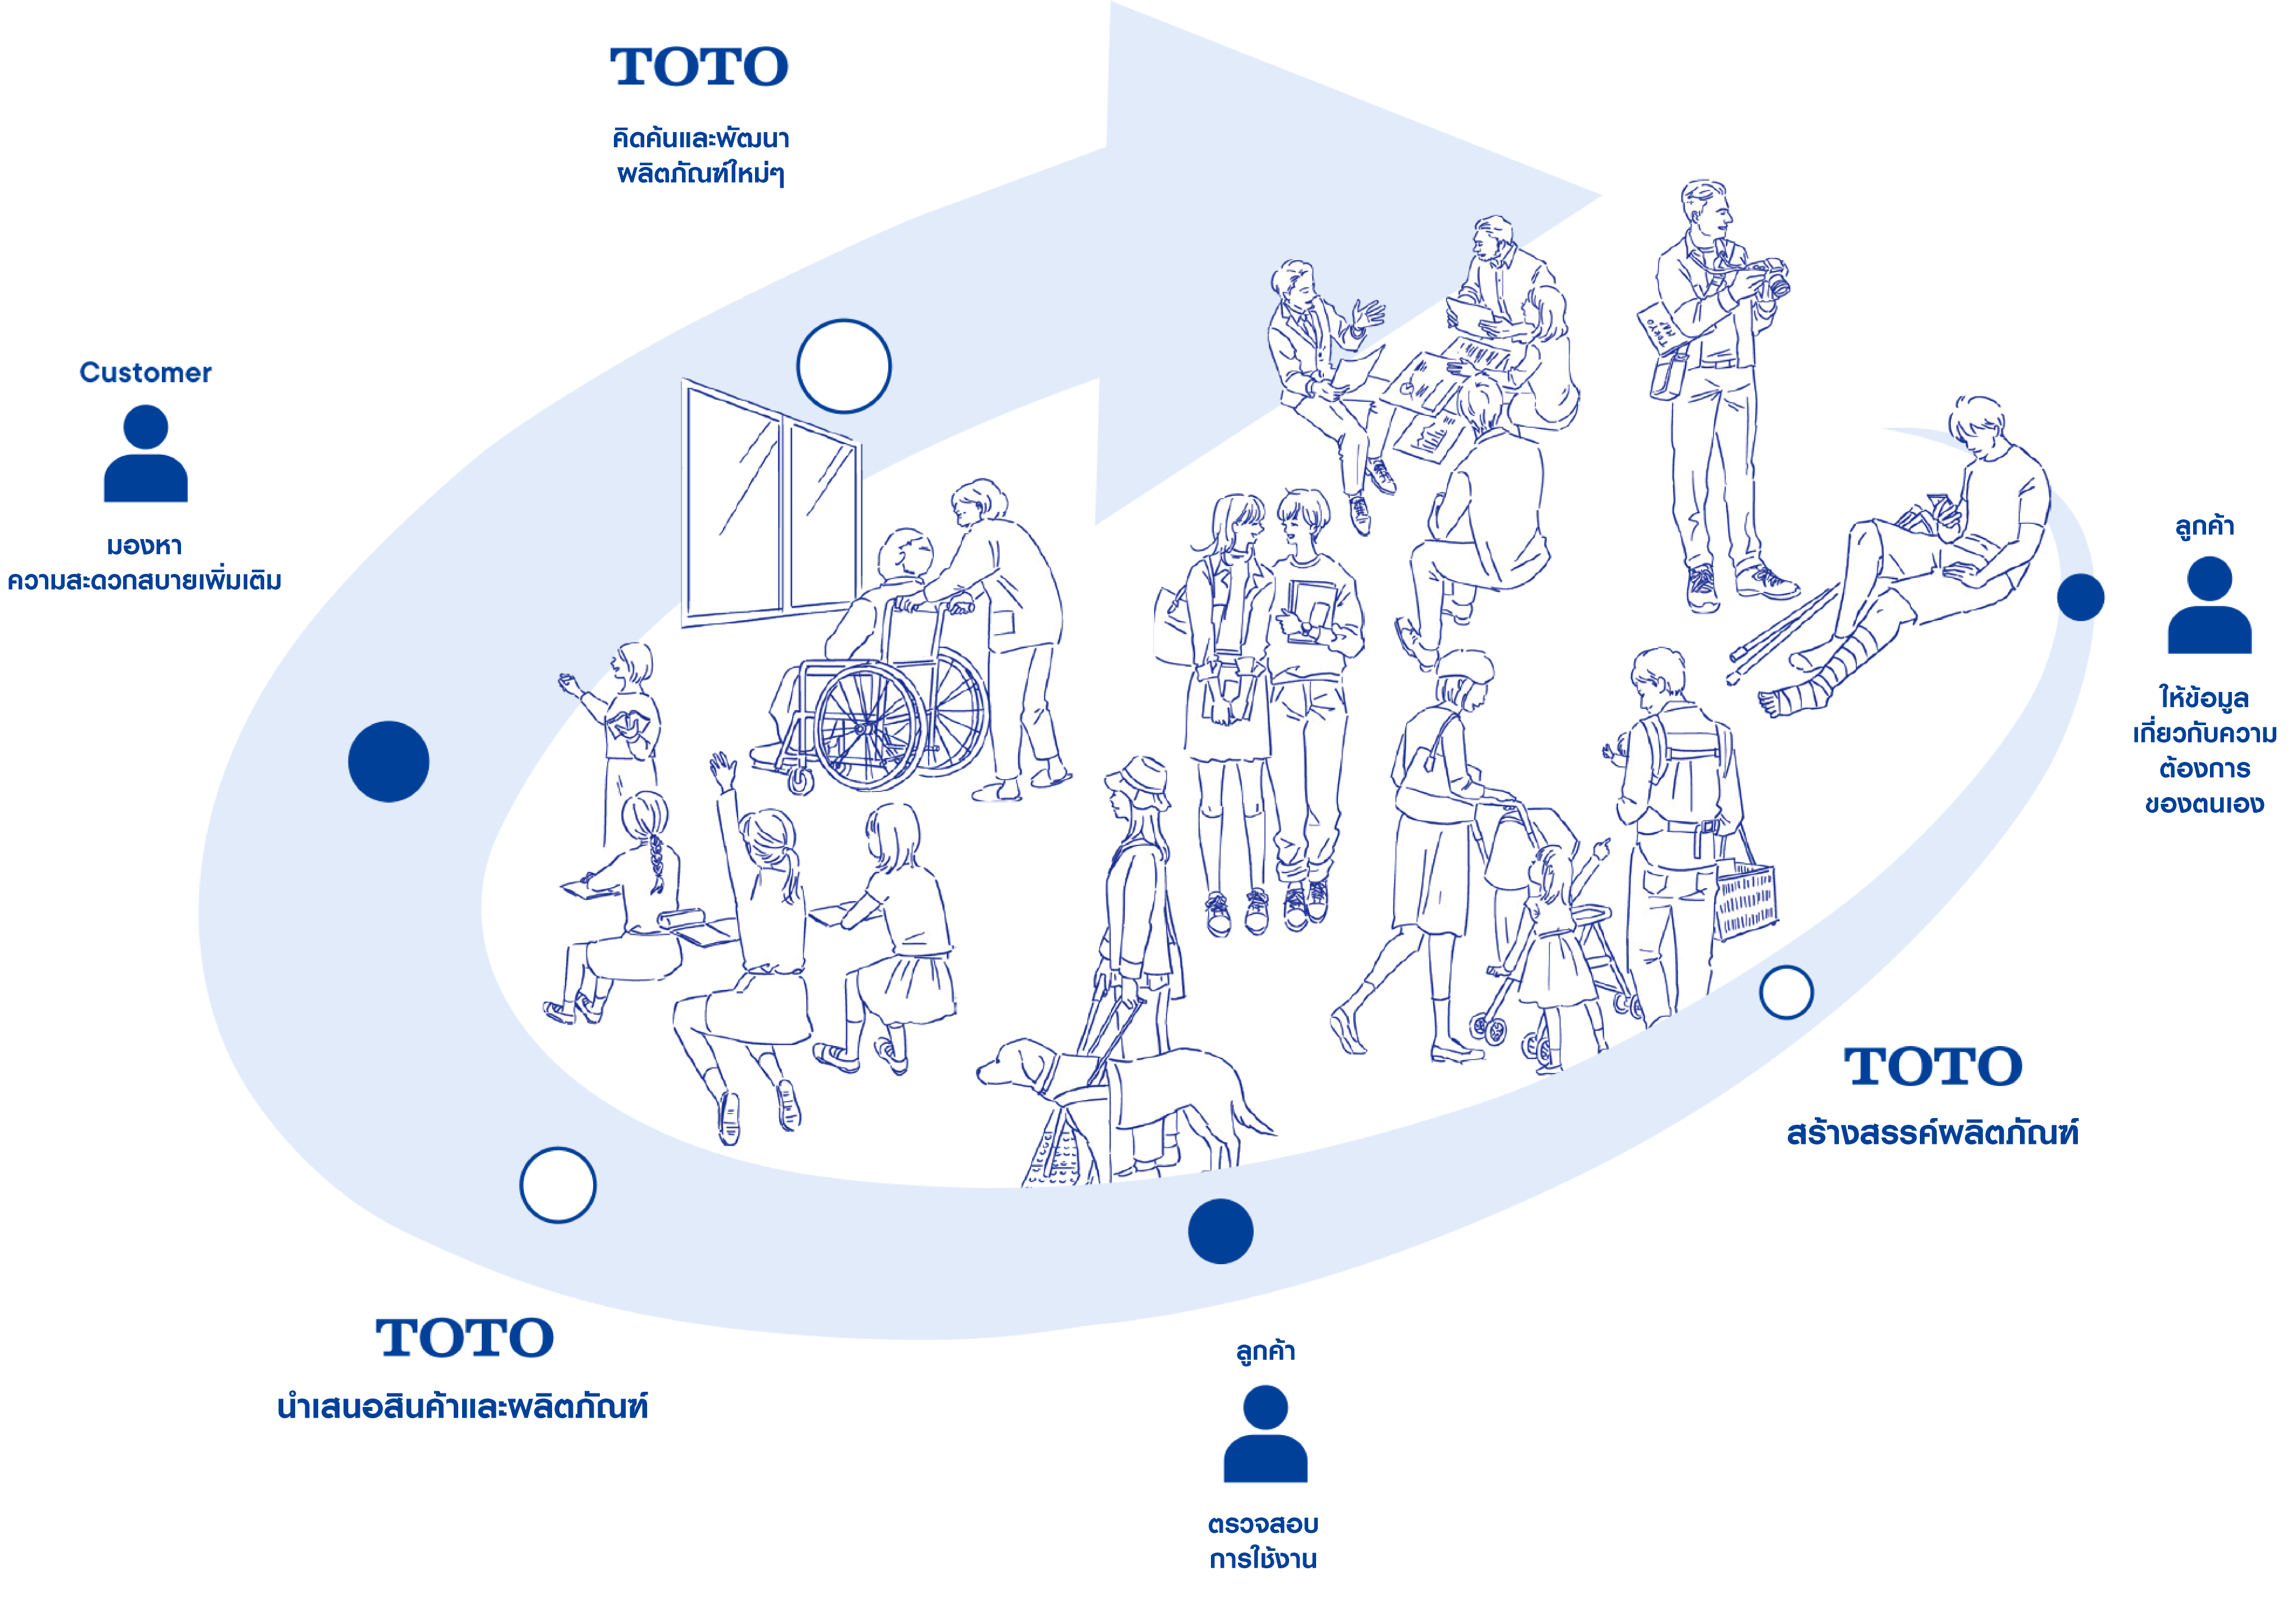 Universal Design of TOTO